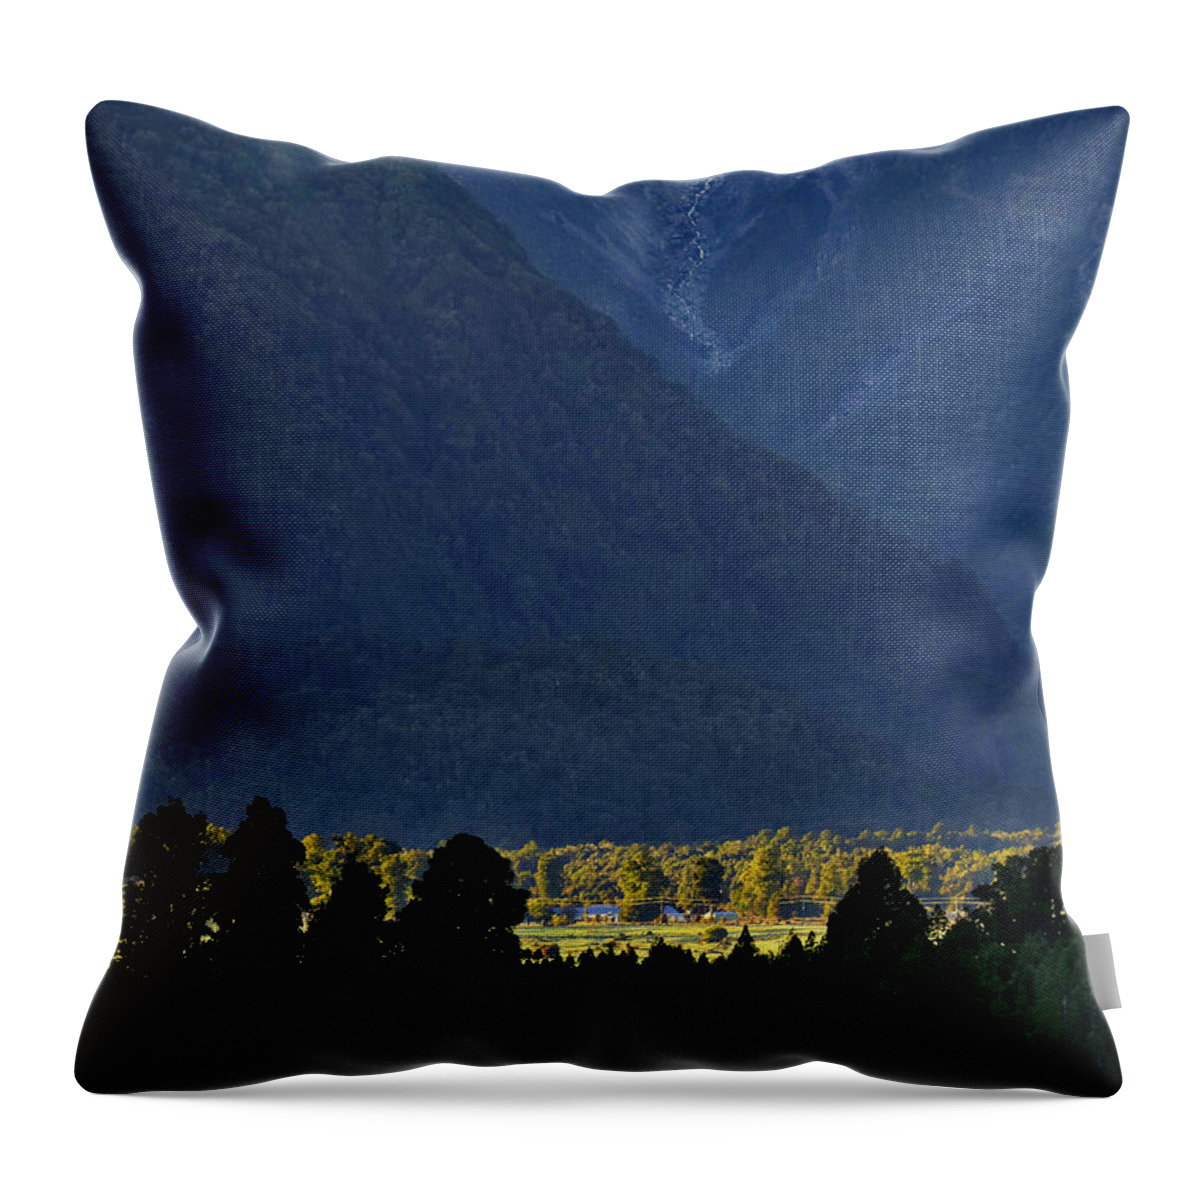 New Zealand Throw Pillow featuring the photograph New Zealand Alps Foothills Sunrise by Steven Ralser